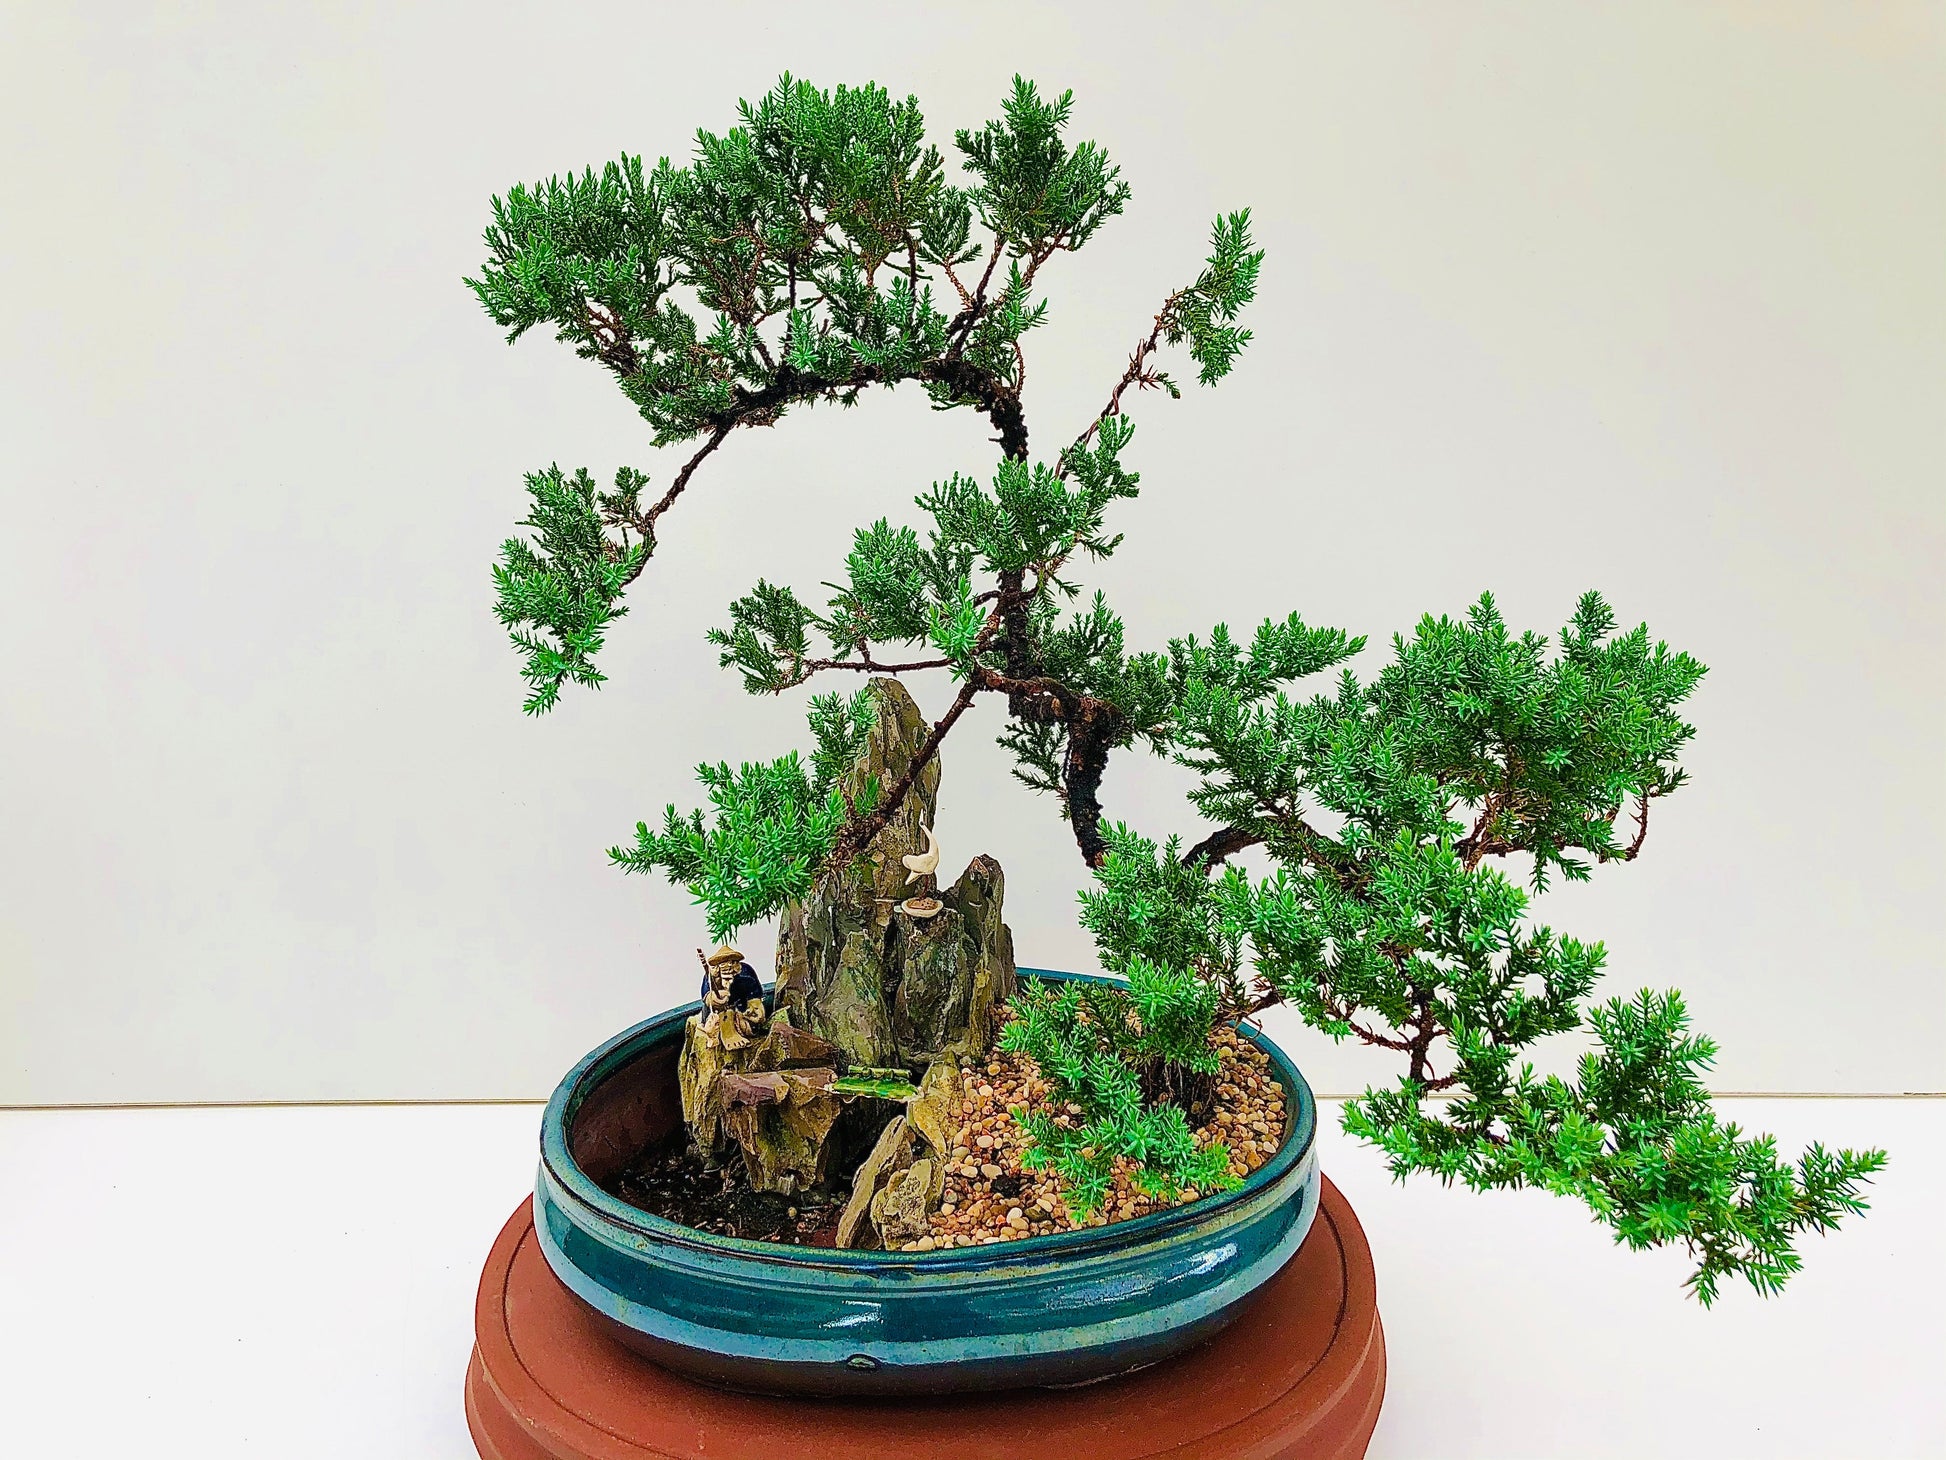 12" Juniper With Rock Feature Bonsai Tree Bonsai Gifts Nursery